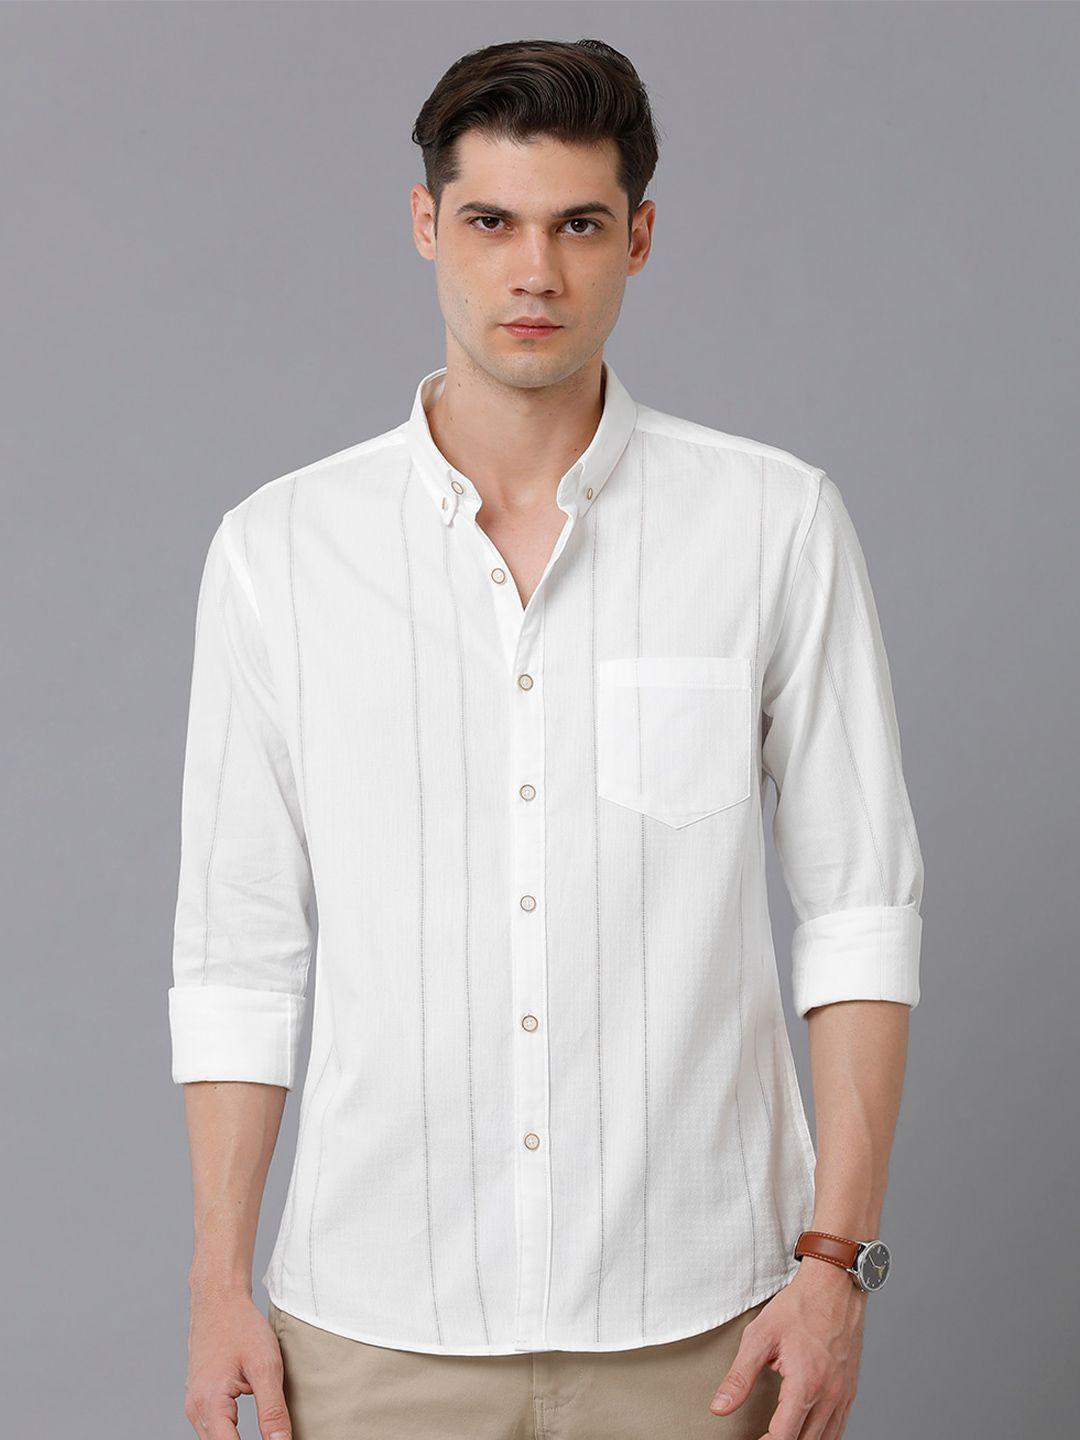 YOVISH Men Comfort Slim Fit Cotton Casual Shirt